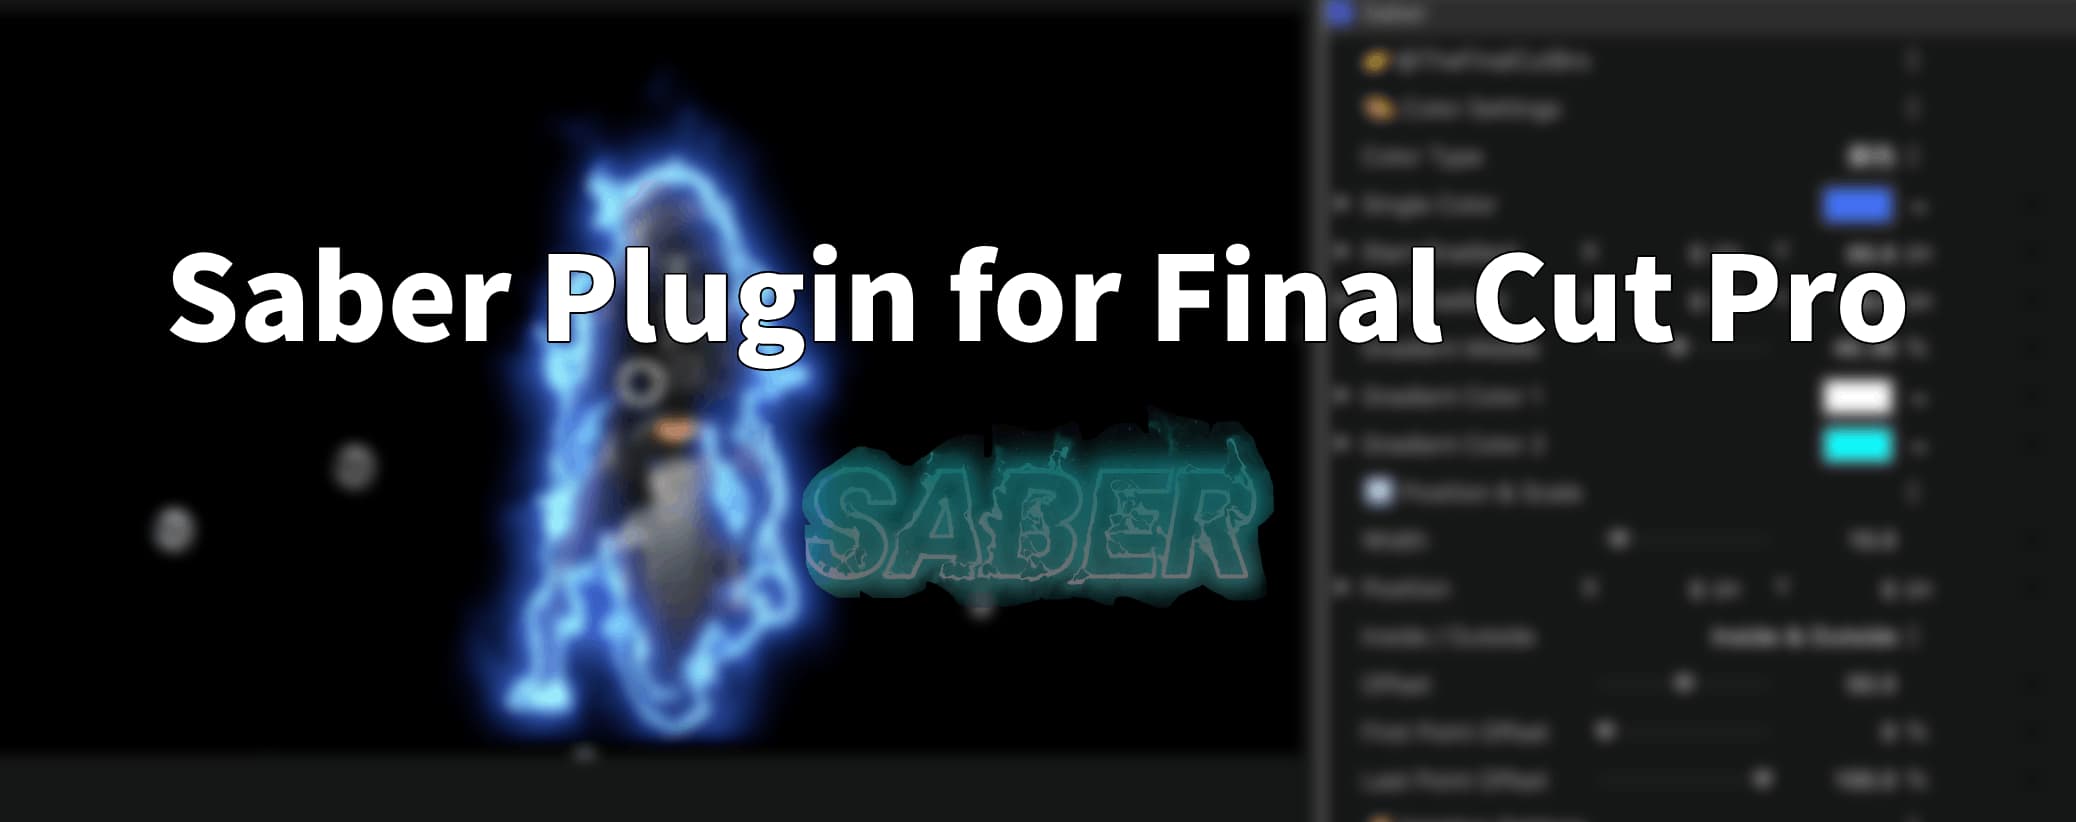 Saber Plugin for Final Cut Pro